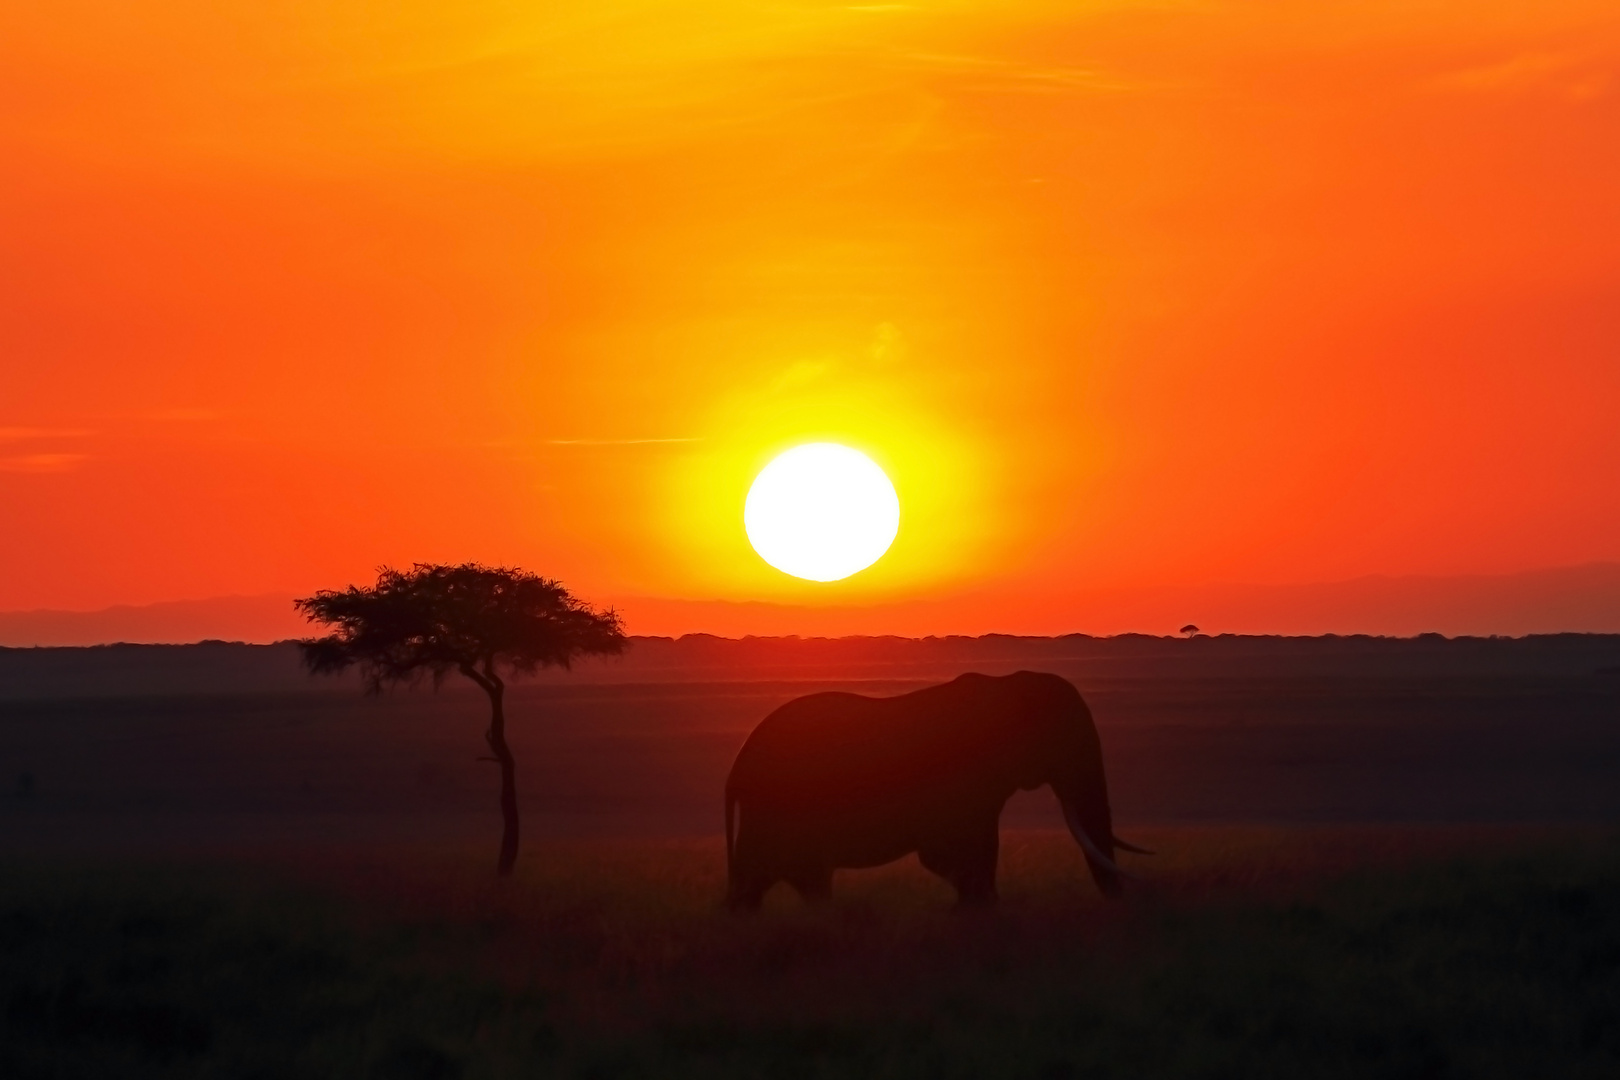 Masai Mara September 2020 